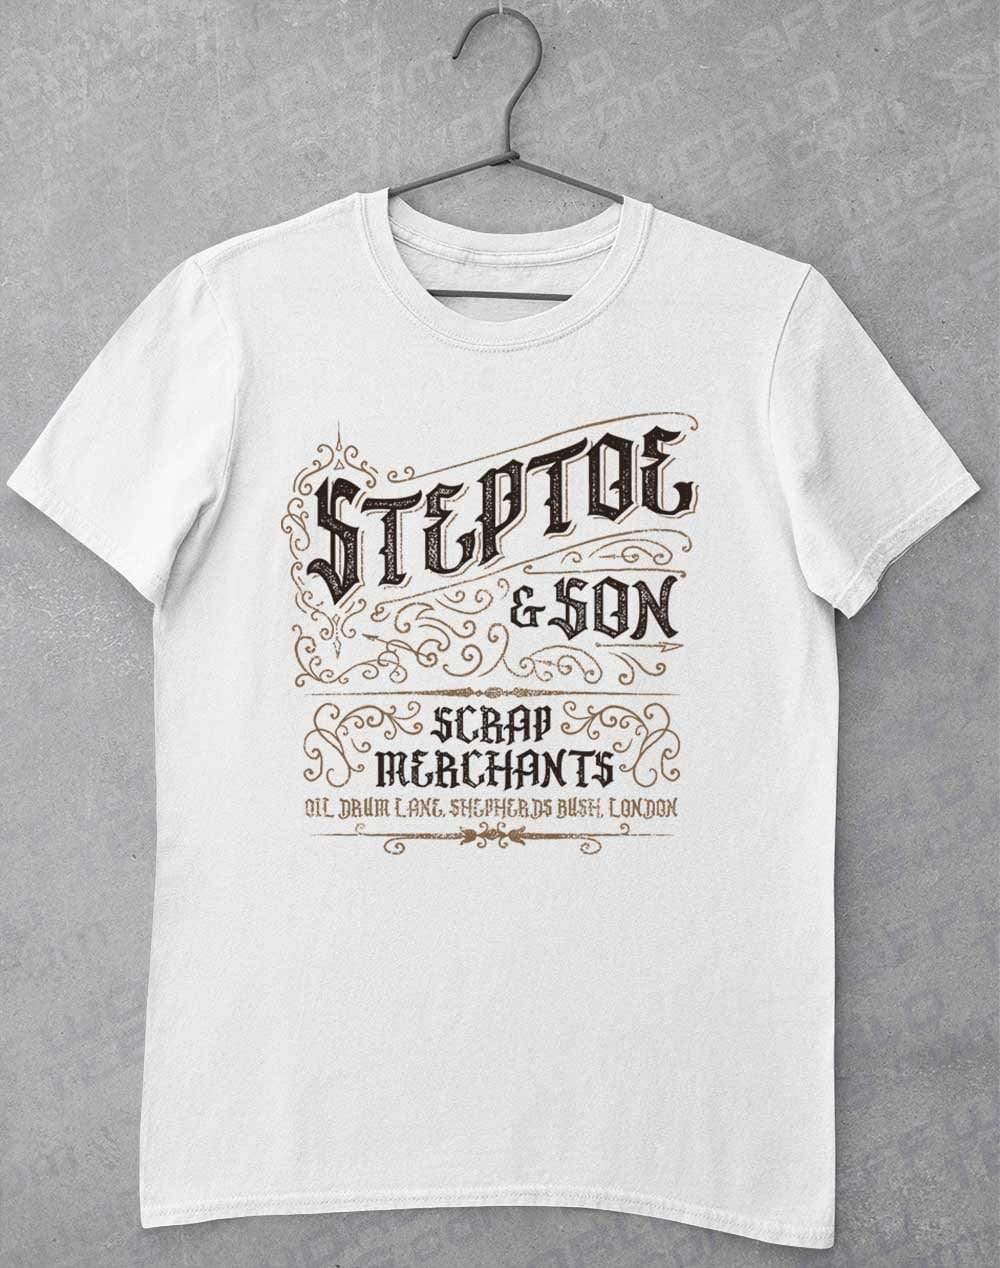 Steptoe & Son Scrap Merchants T-Shirt S / White  - Off World Tees